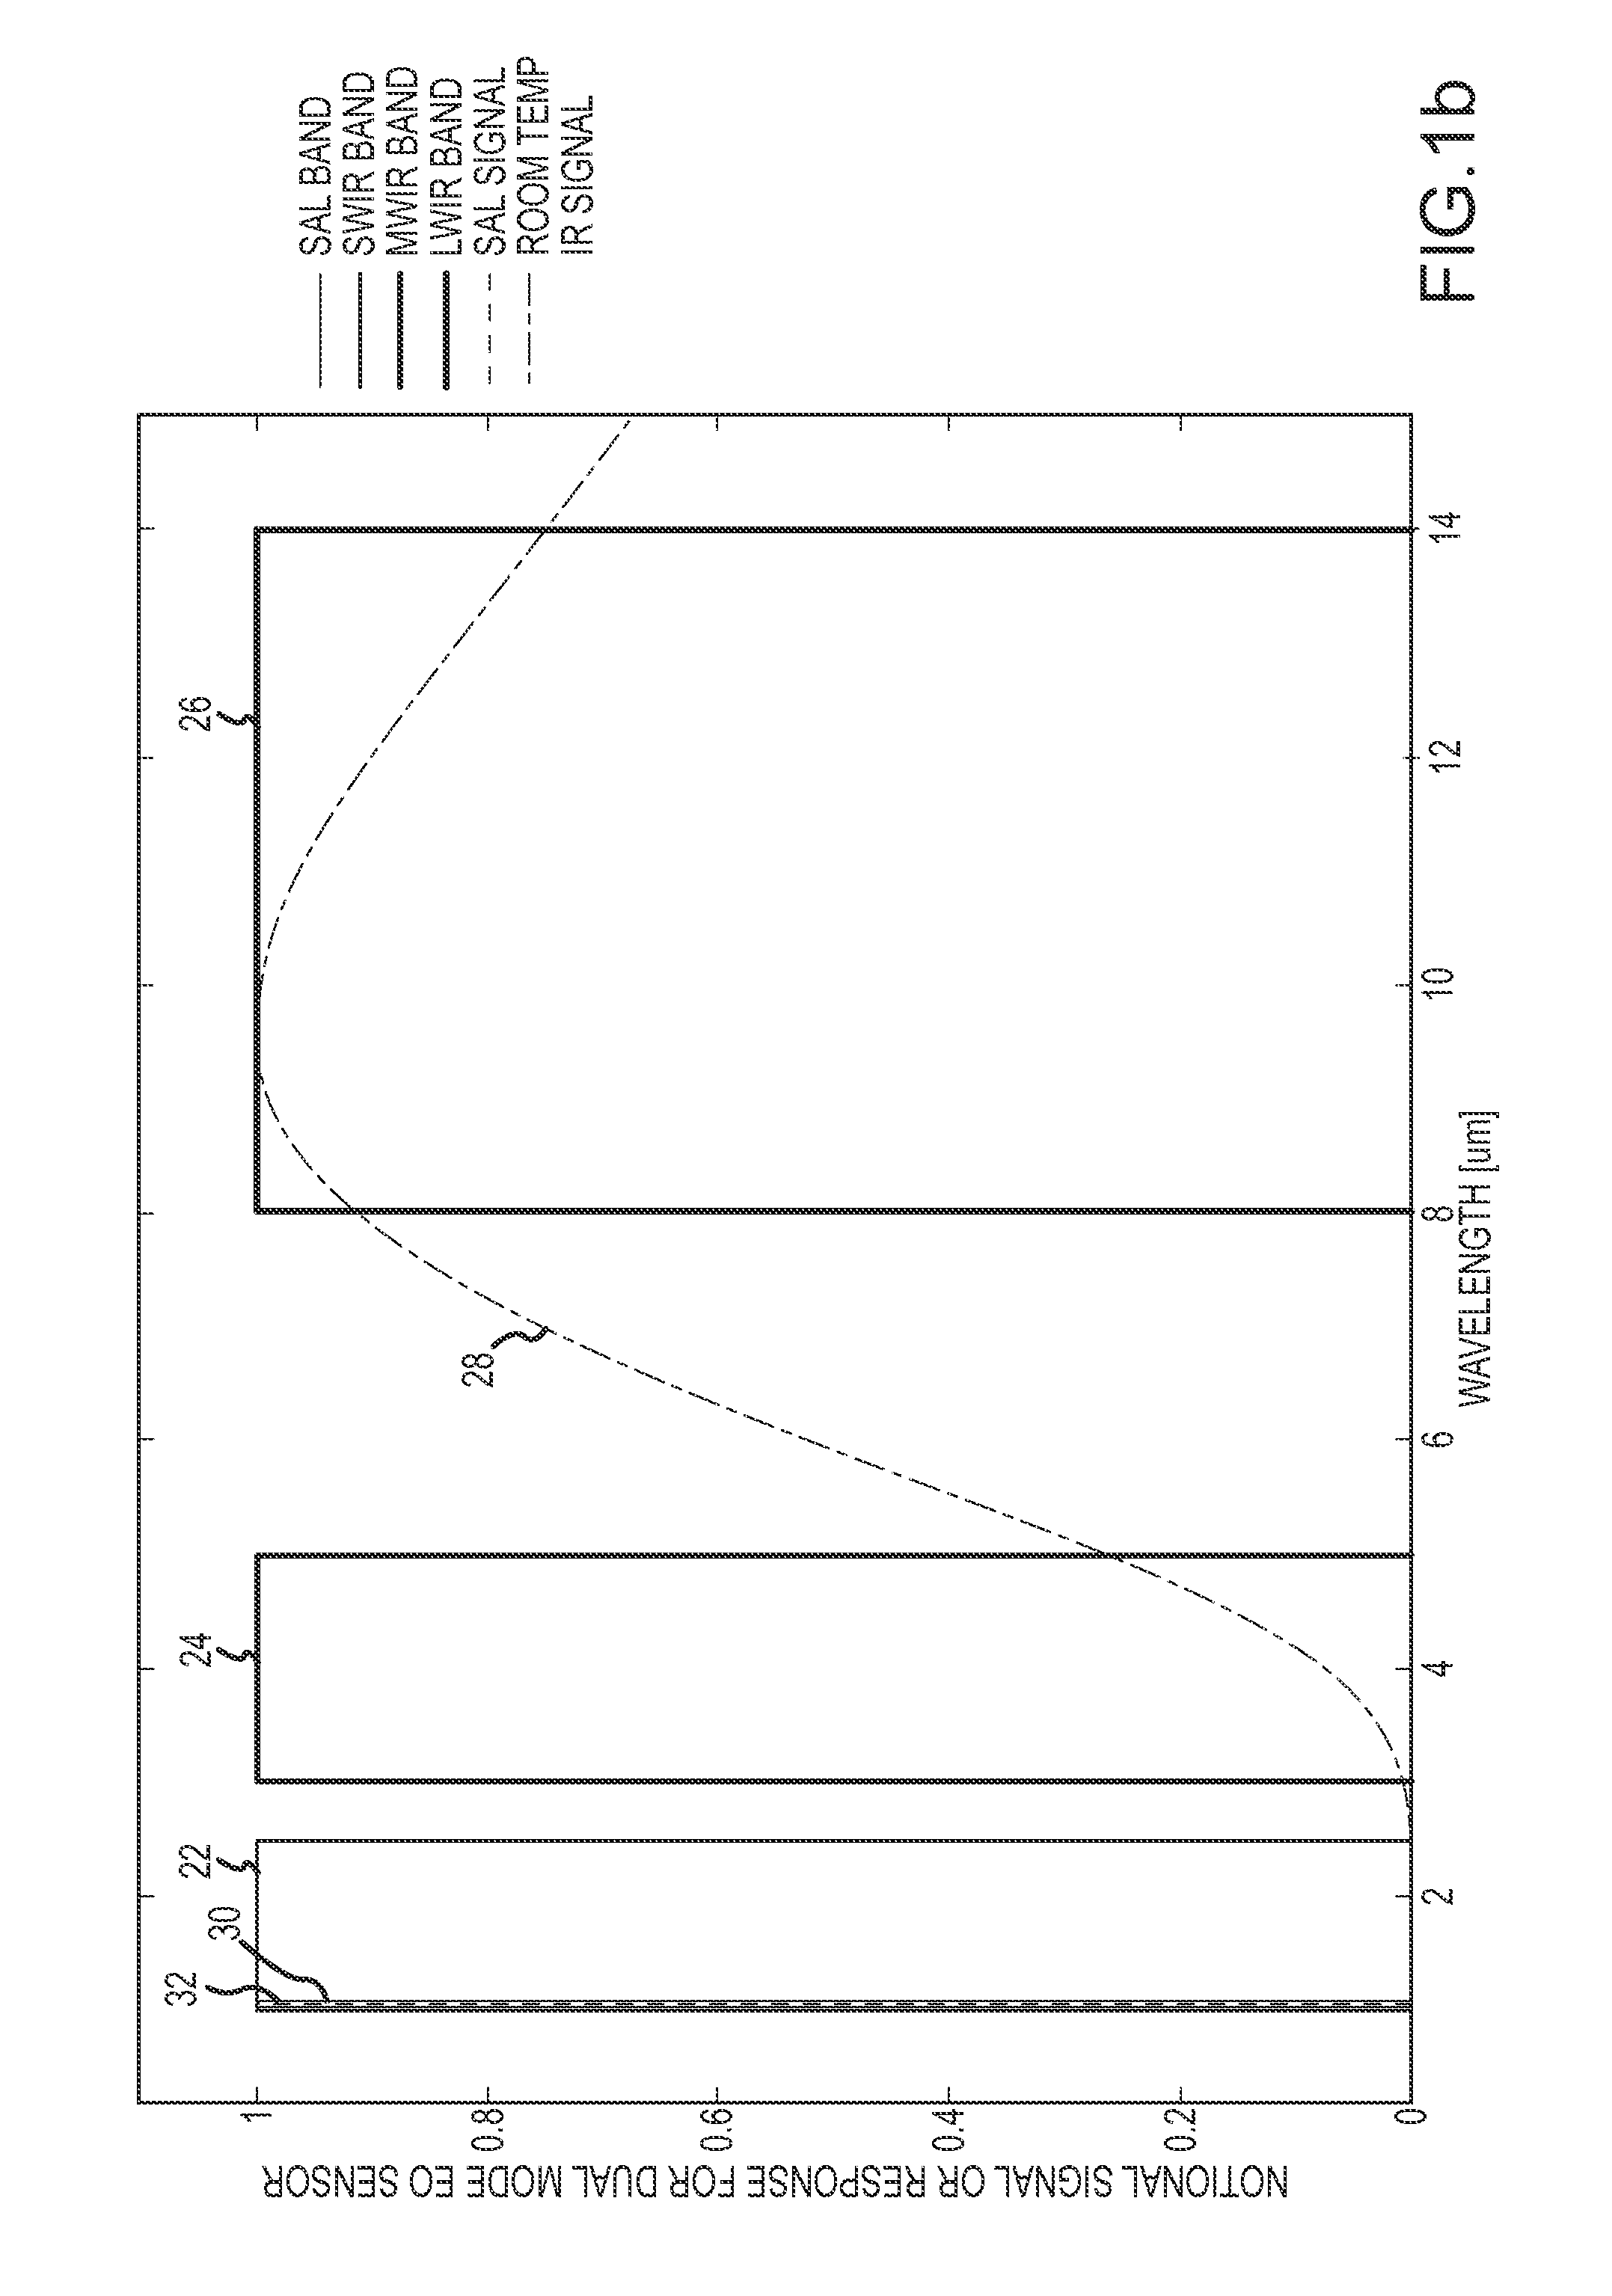 Dual-mode electro-optic sensor and method of using target designation as a guide star for wavefront error estimation